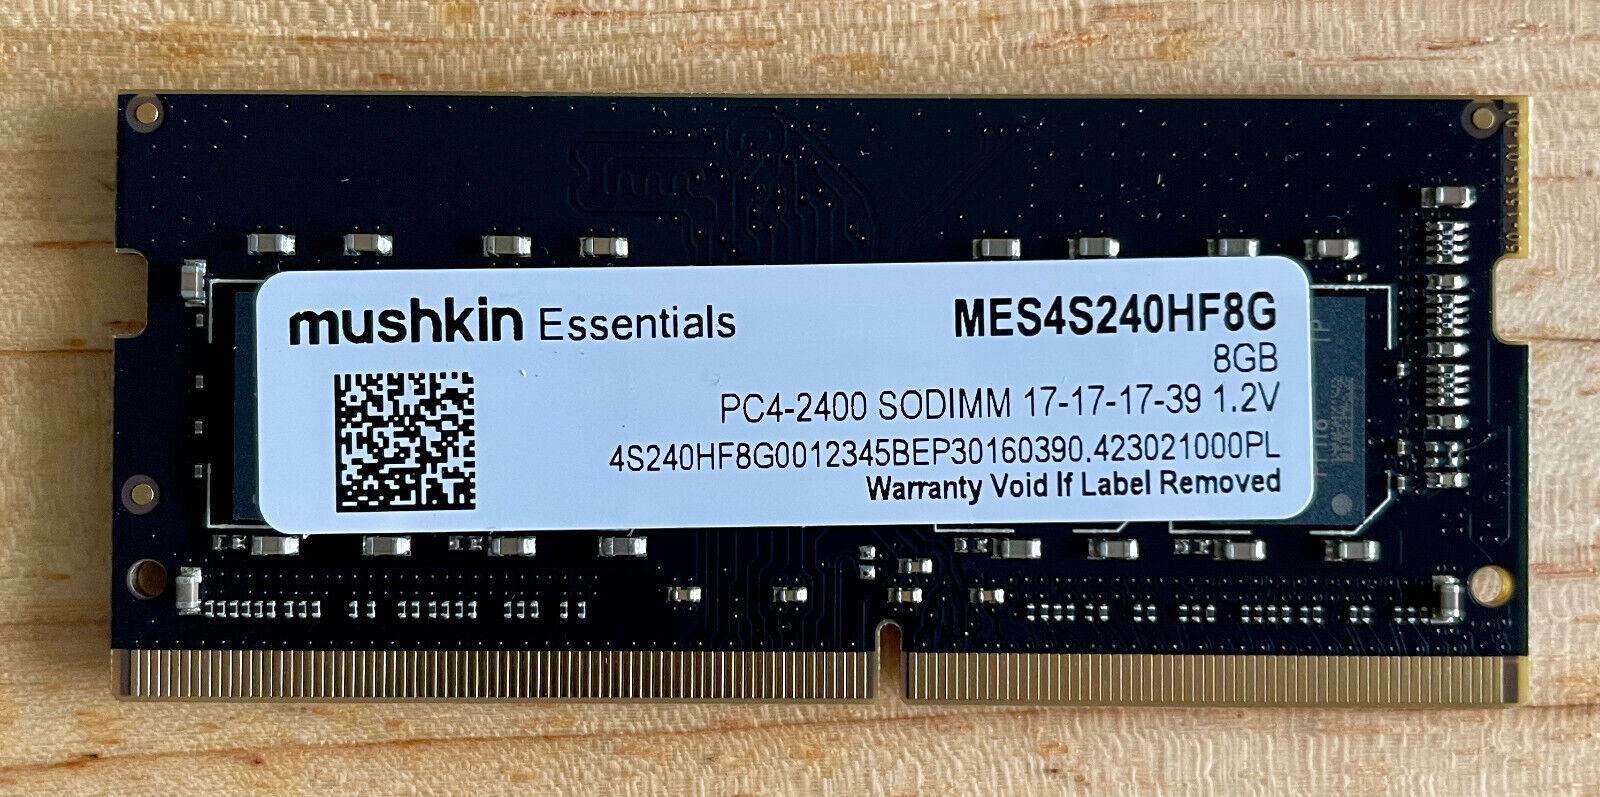 MUSHKIN 8GB ESSENTIALS DDR4 SODIMM PC4-2400 2400MHZ 288-PIN MES4S240HF8G TESTED